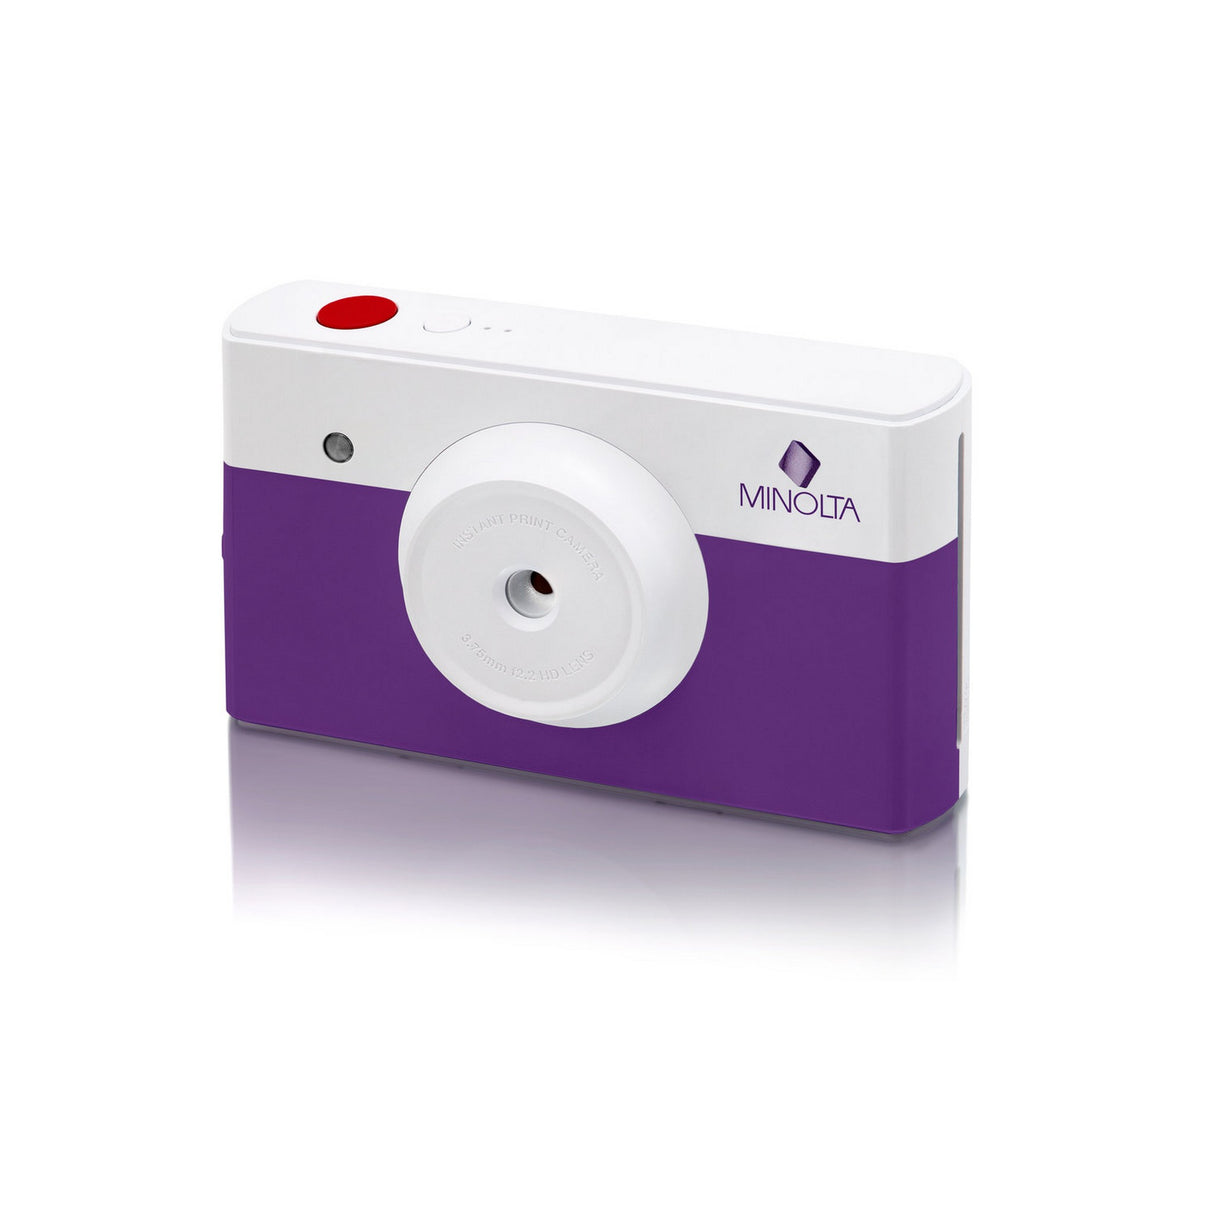 Minolta Instant Print Digital Camera, Purple